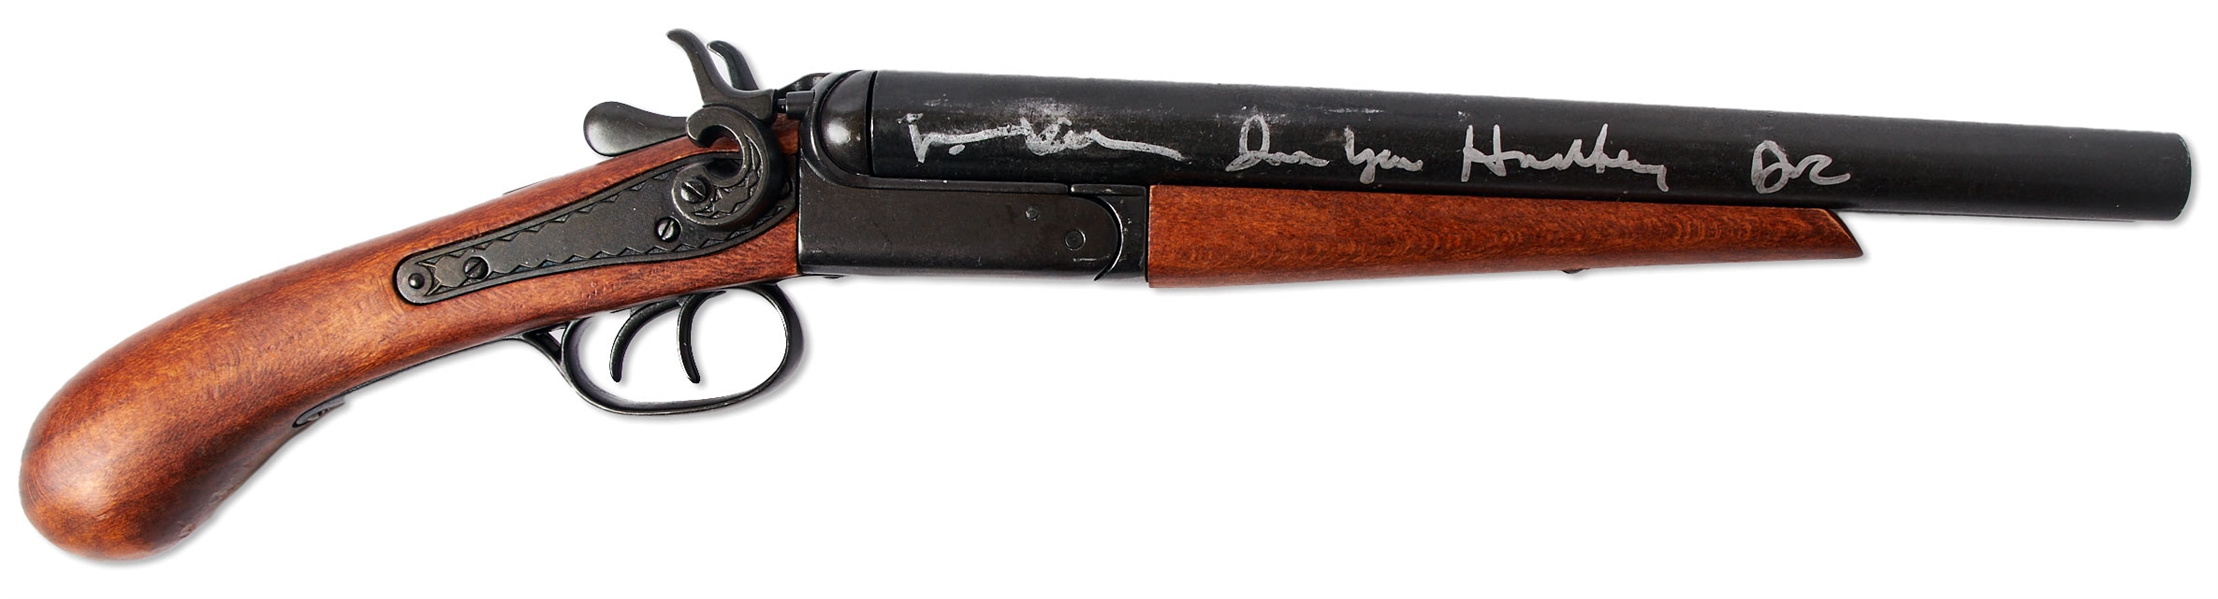 Val Kilmer Signed ''Tombstone'' Rifle -- Kilmer Writes ''Val Kilmer I'm your Huckleberry Doc''